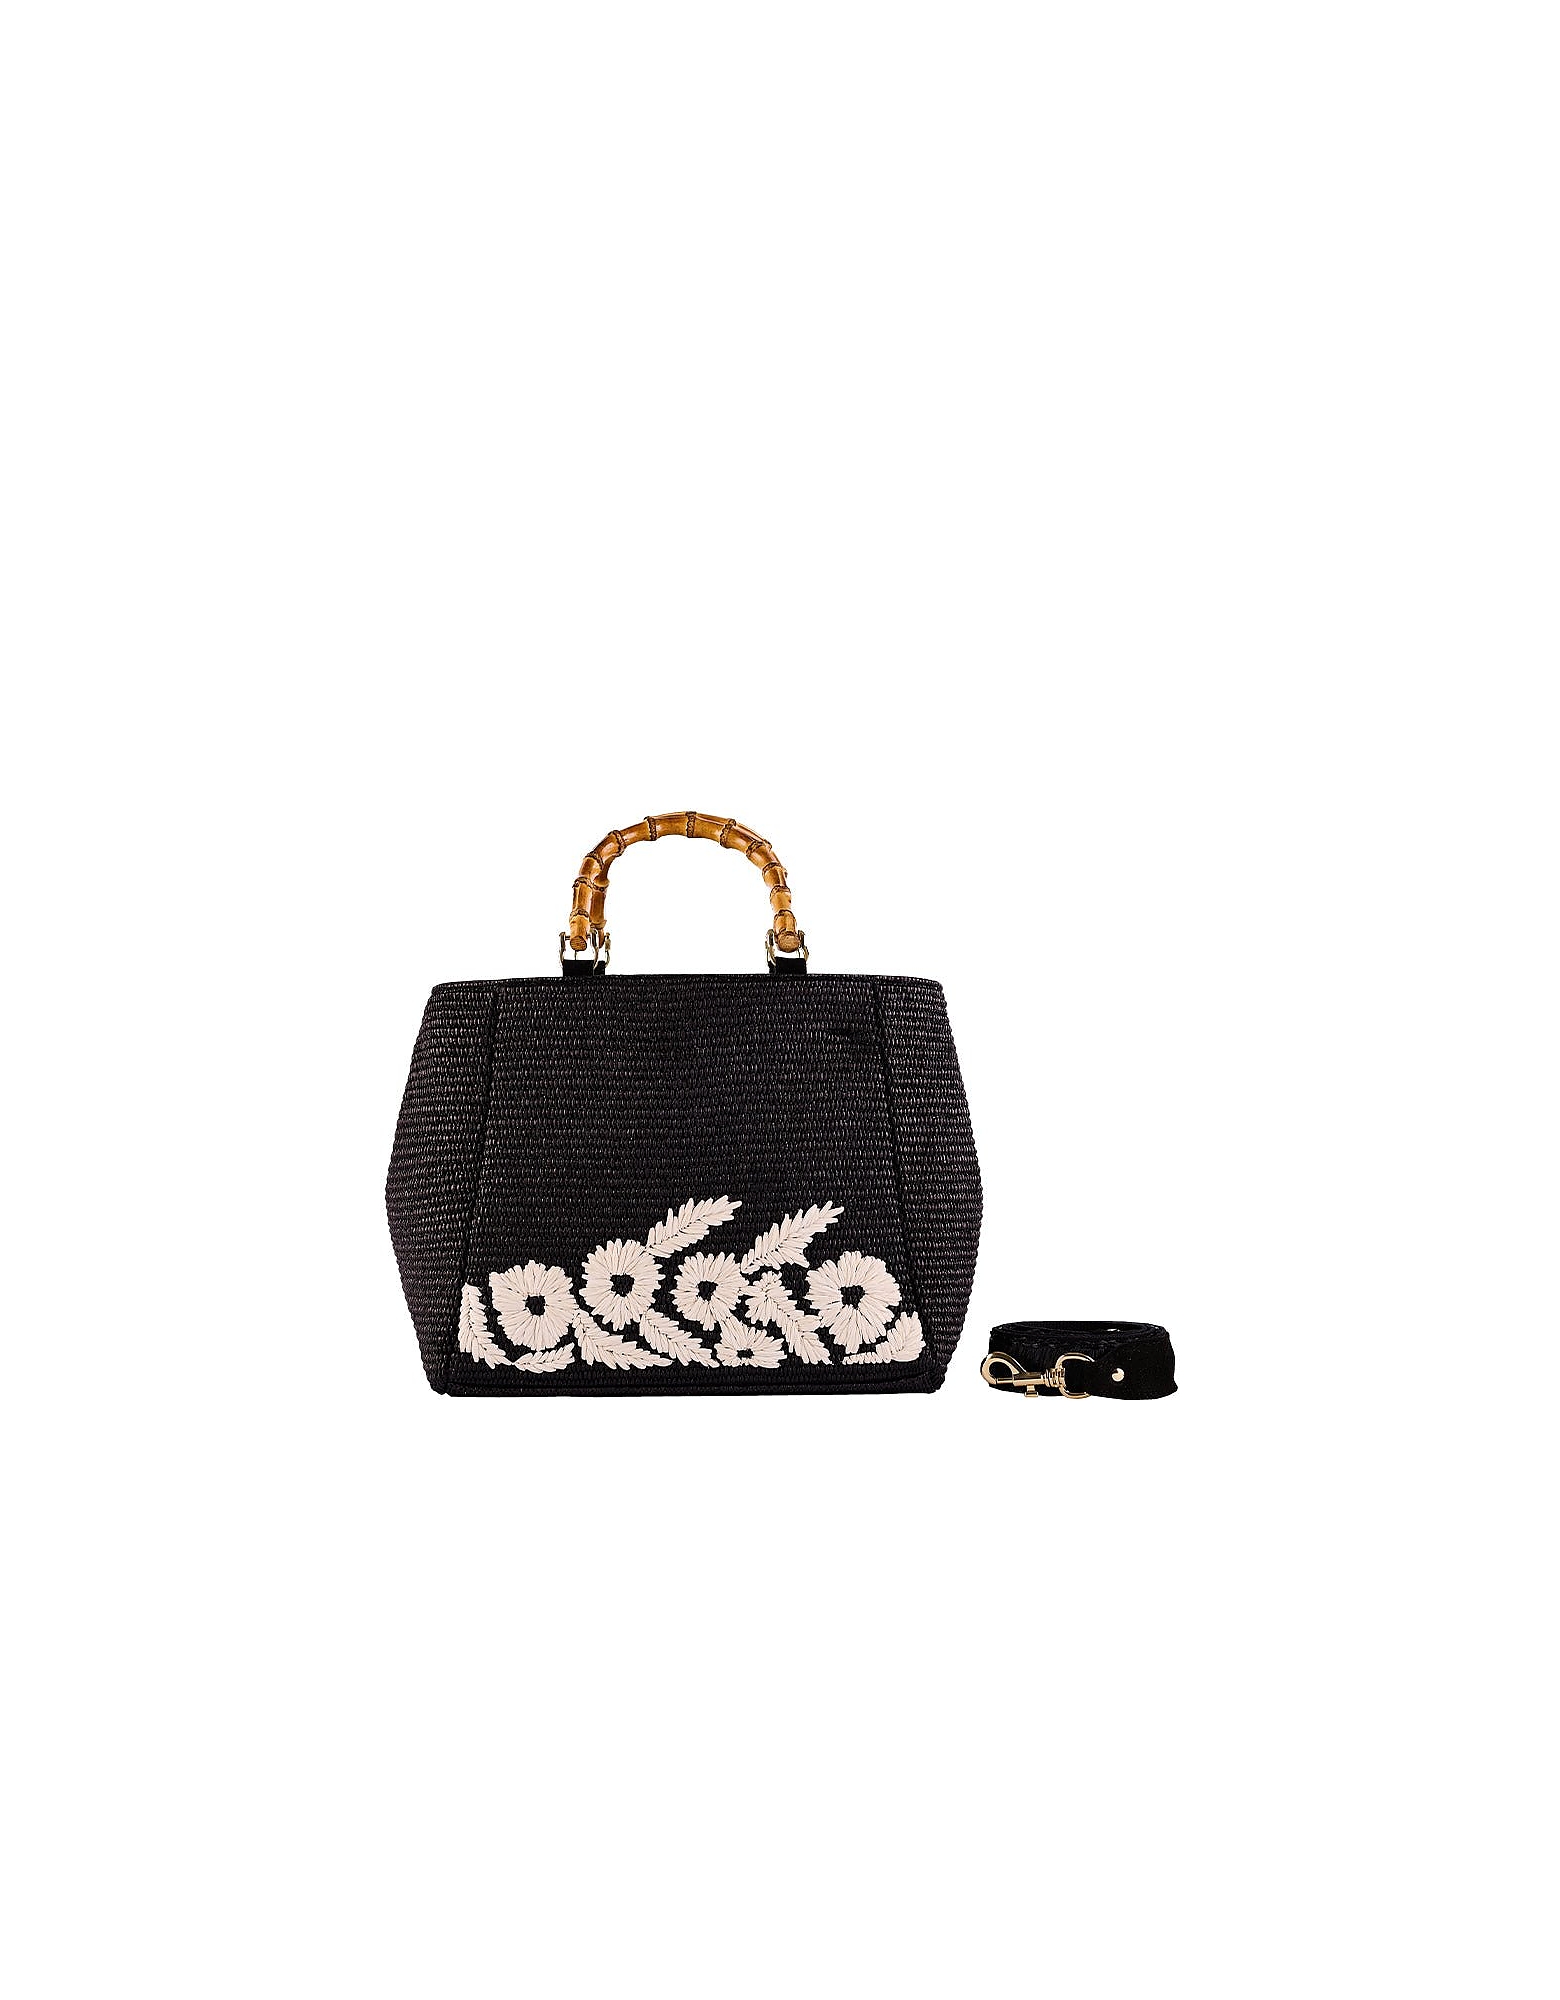 Viamailbag Designer Handbags Giava Trim - Top Handle Bag In Noir